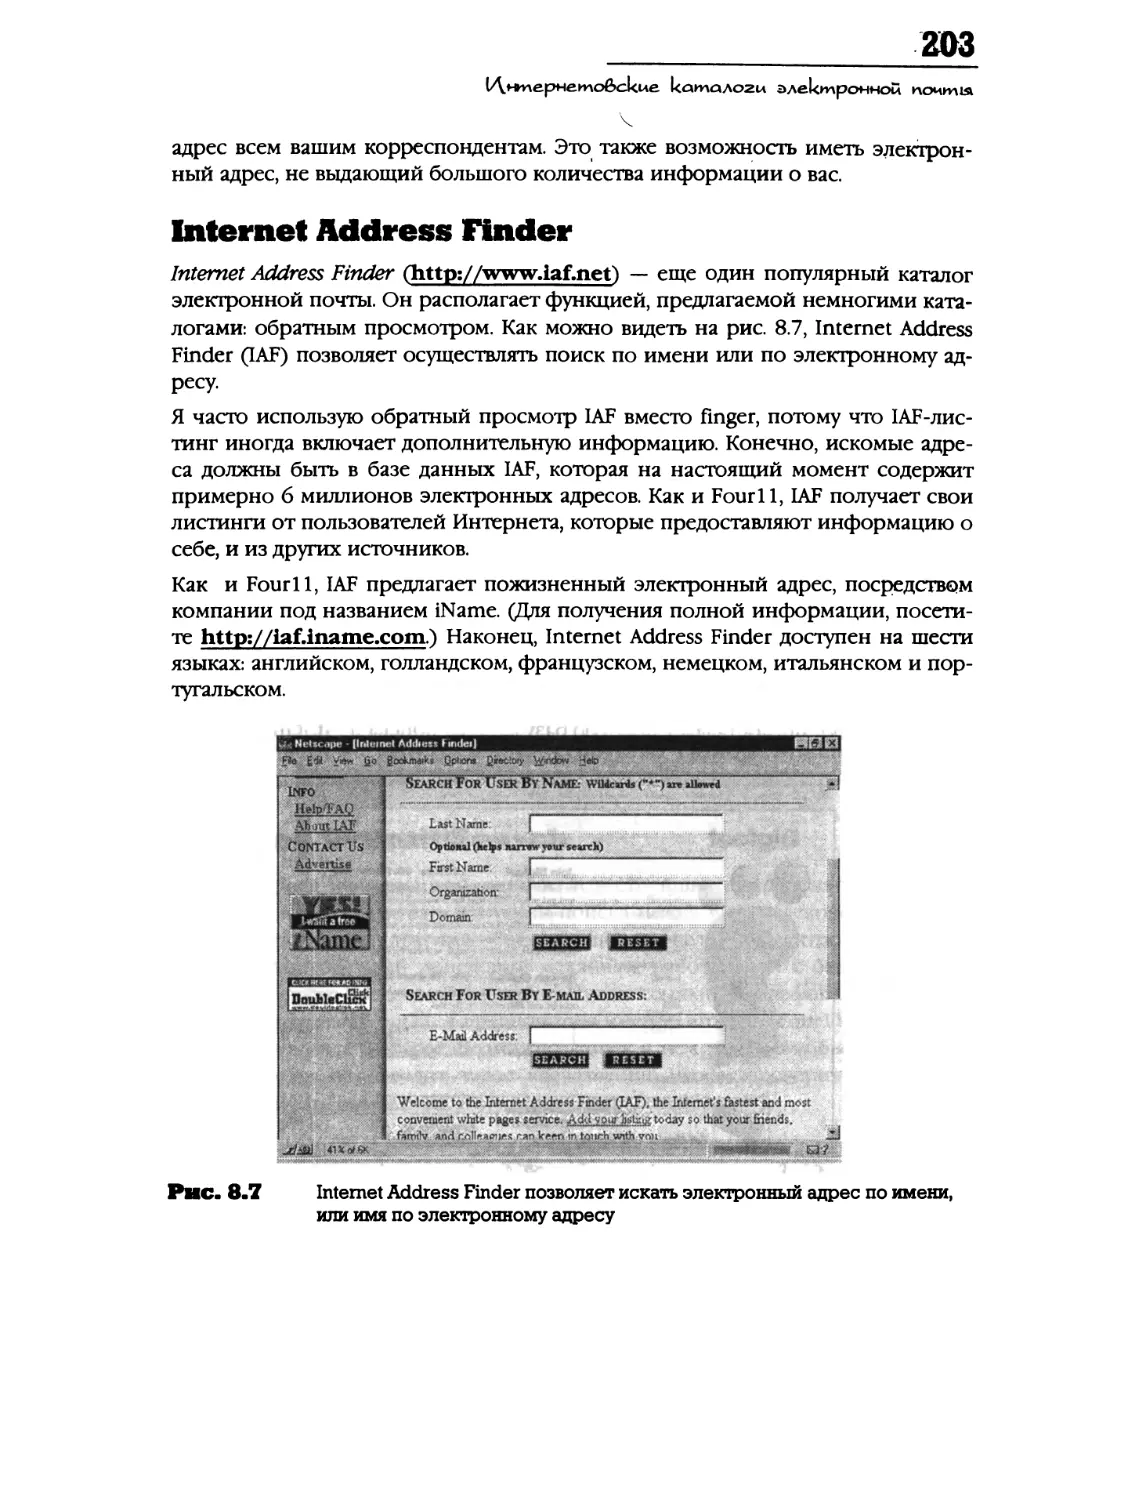 Internet Address Finder